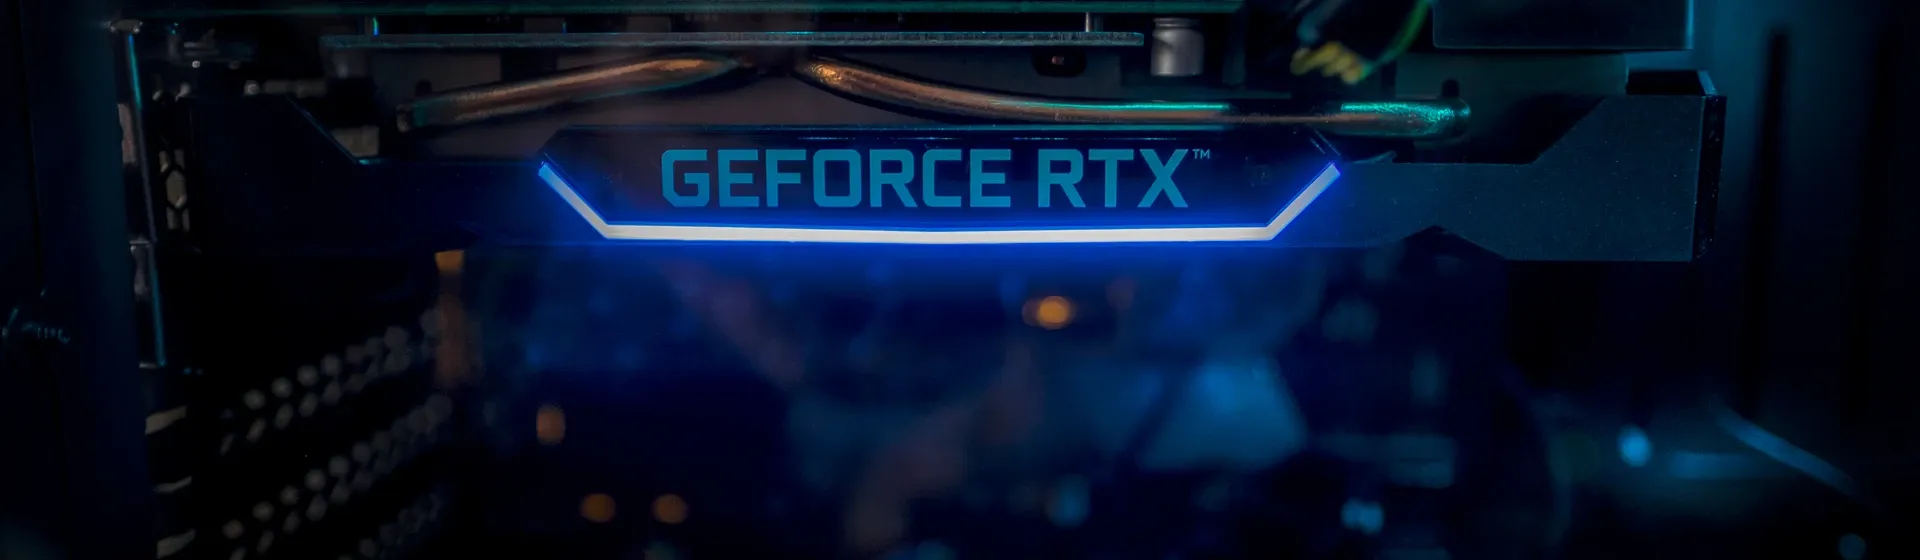 Placa de vídeo RTX: 7 modelos de GPUs potentes da Nvidia